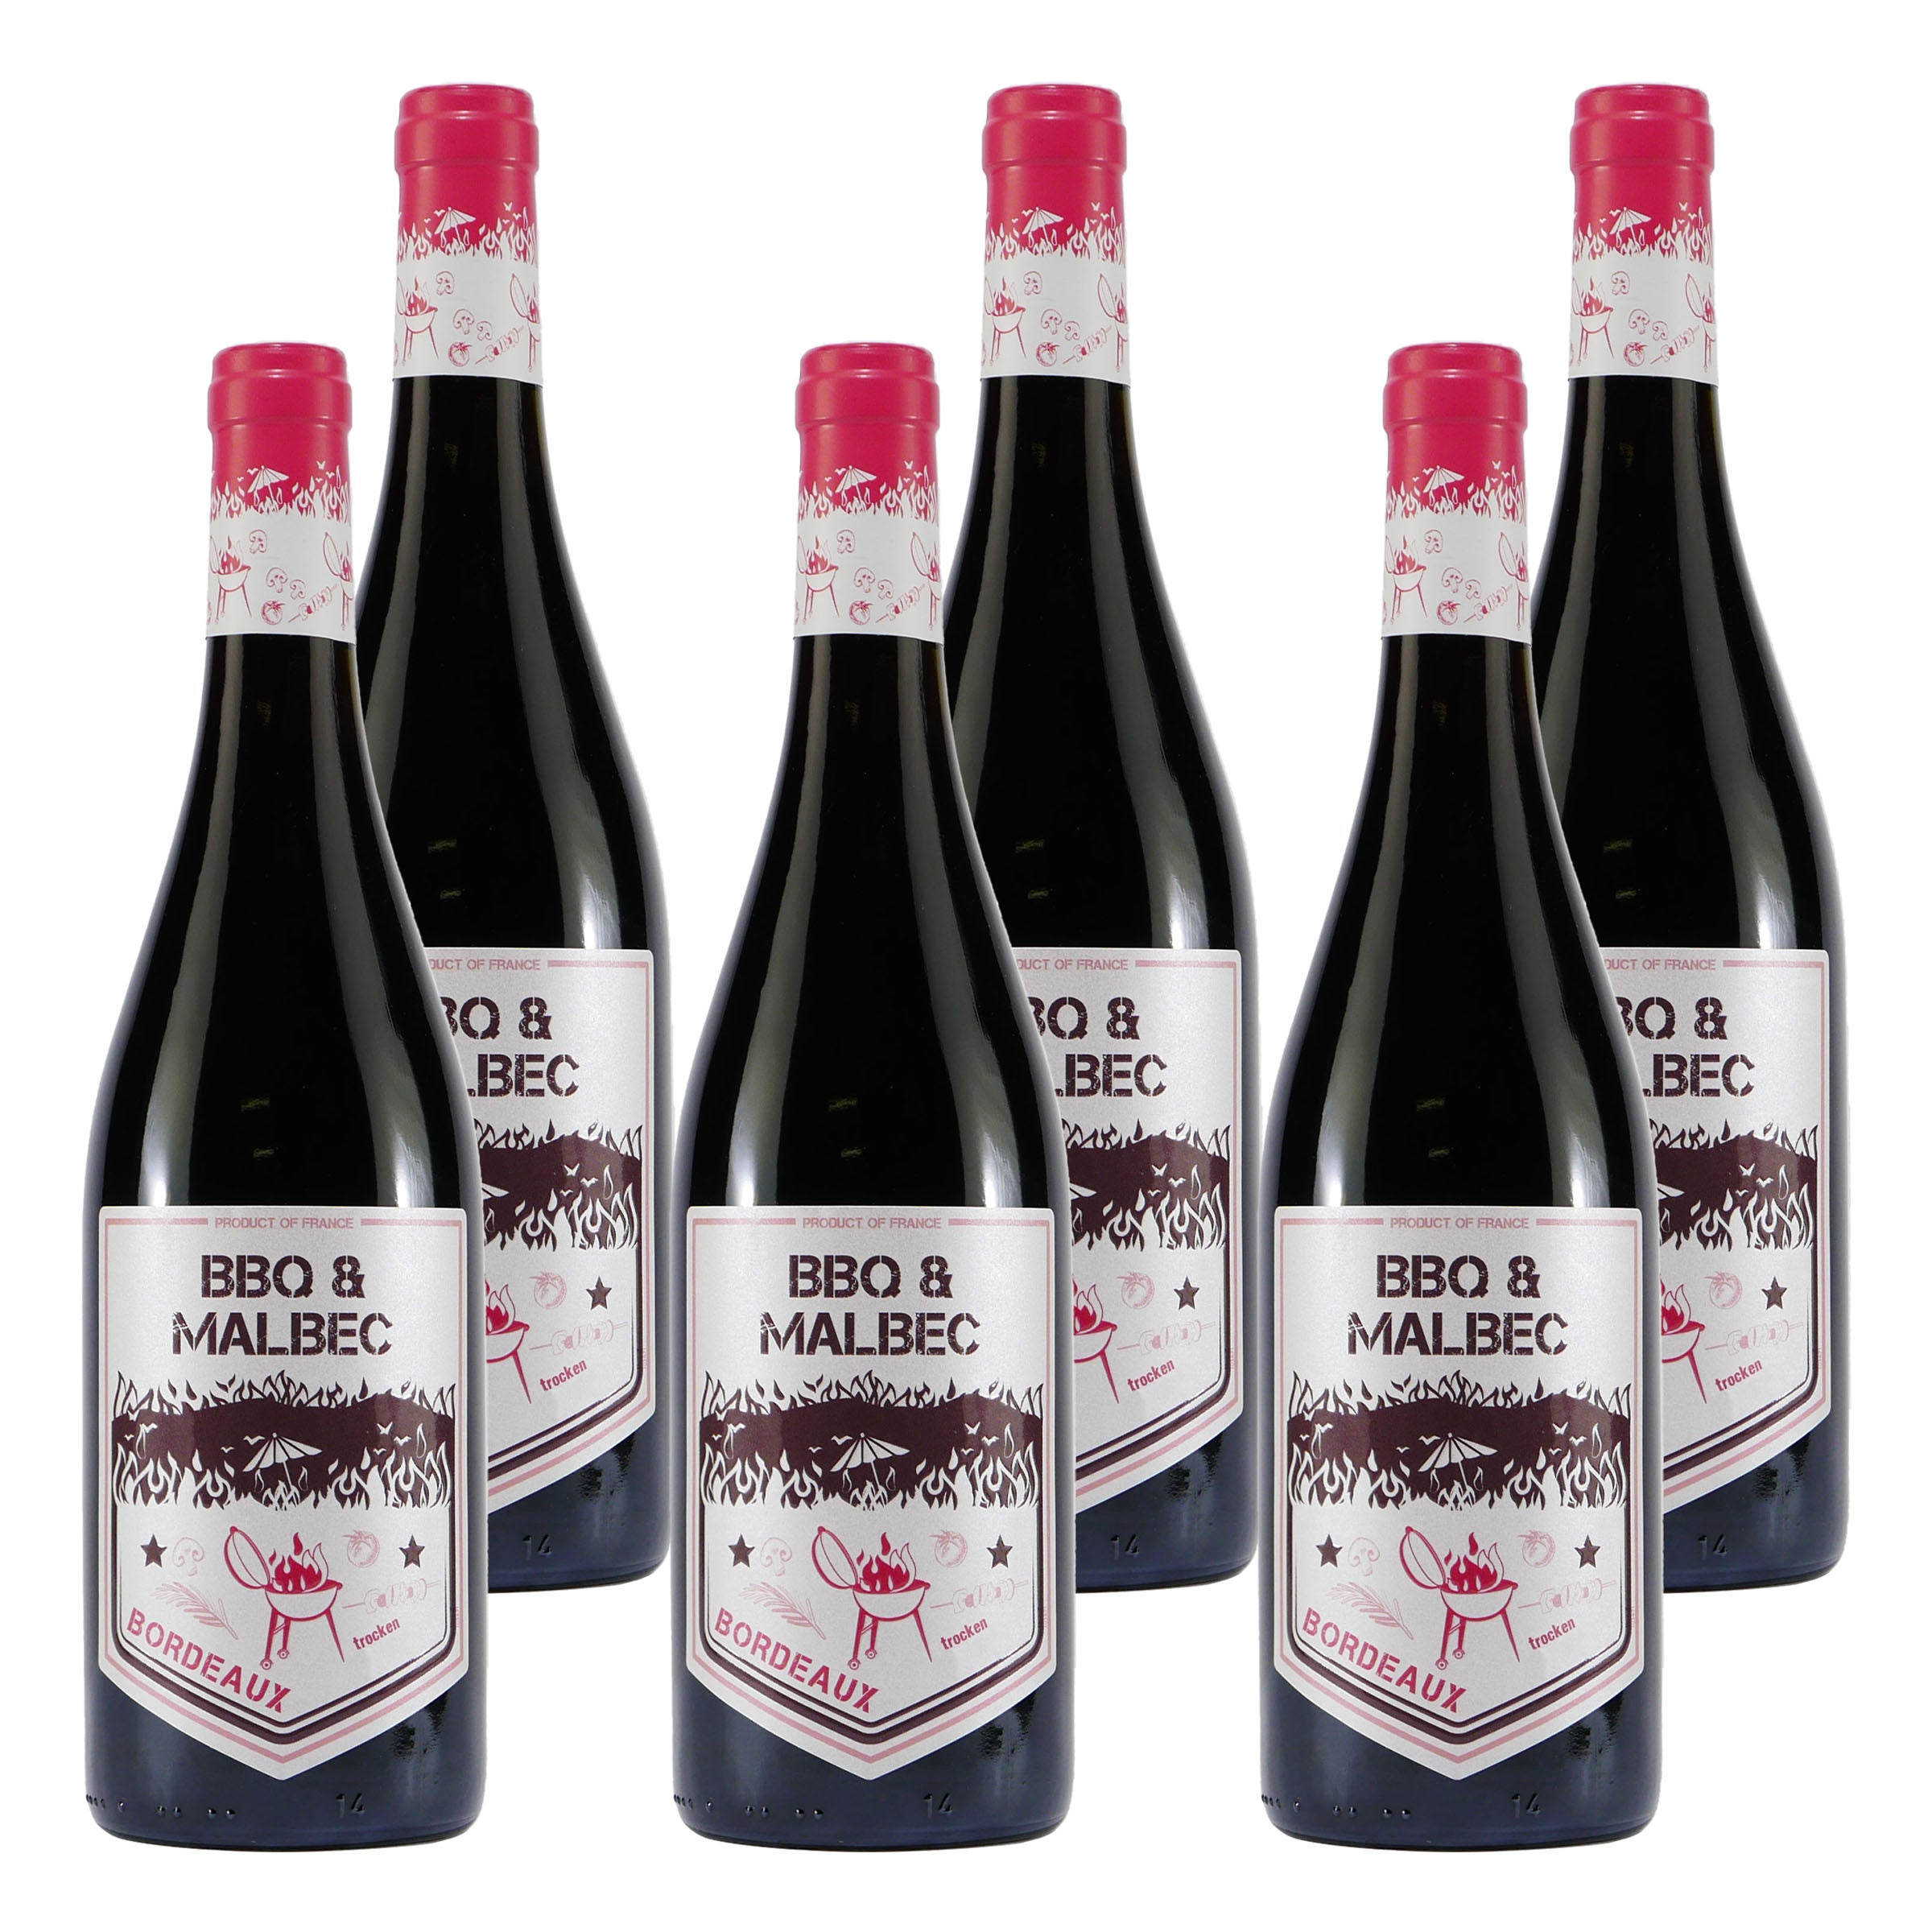 BBQ & Malbec Bordeaux AOP Kombination -trocken- Grillabende Perfekte für